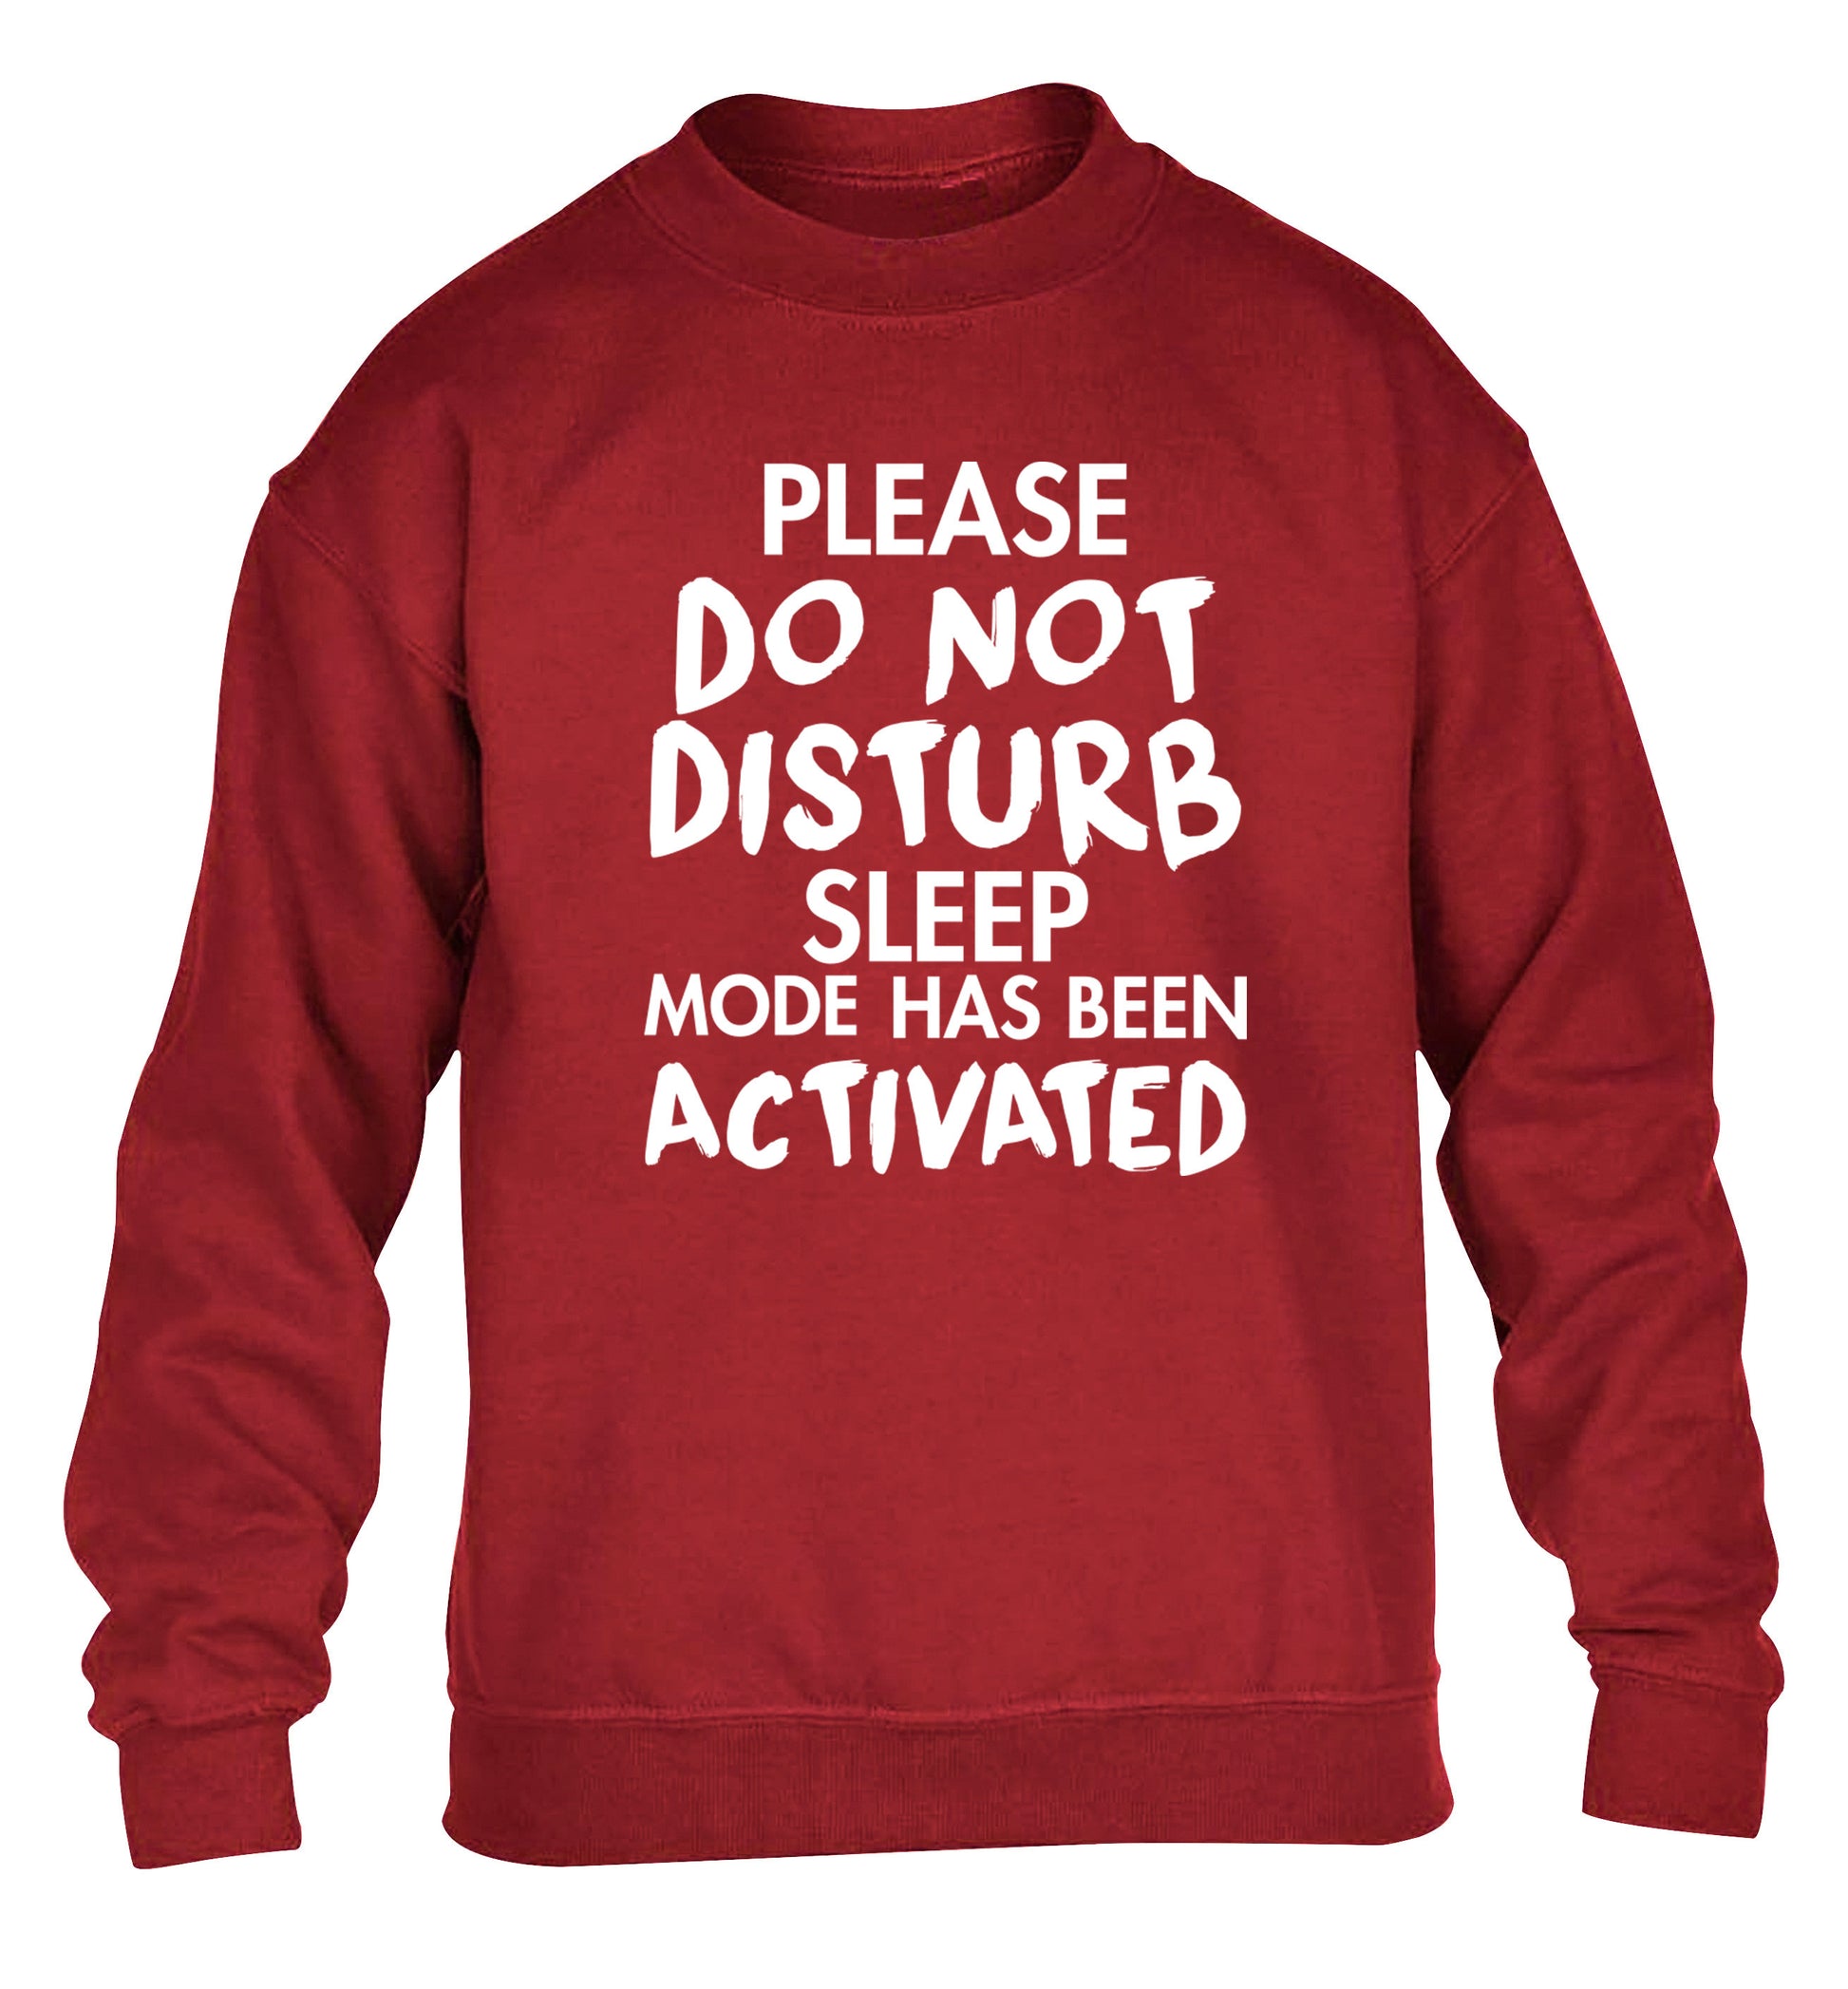 Please do not disturb sleeping mode has been activated children's grey sweater 12-14 Years